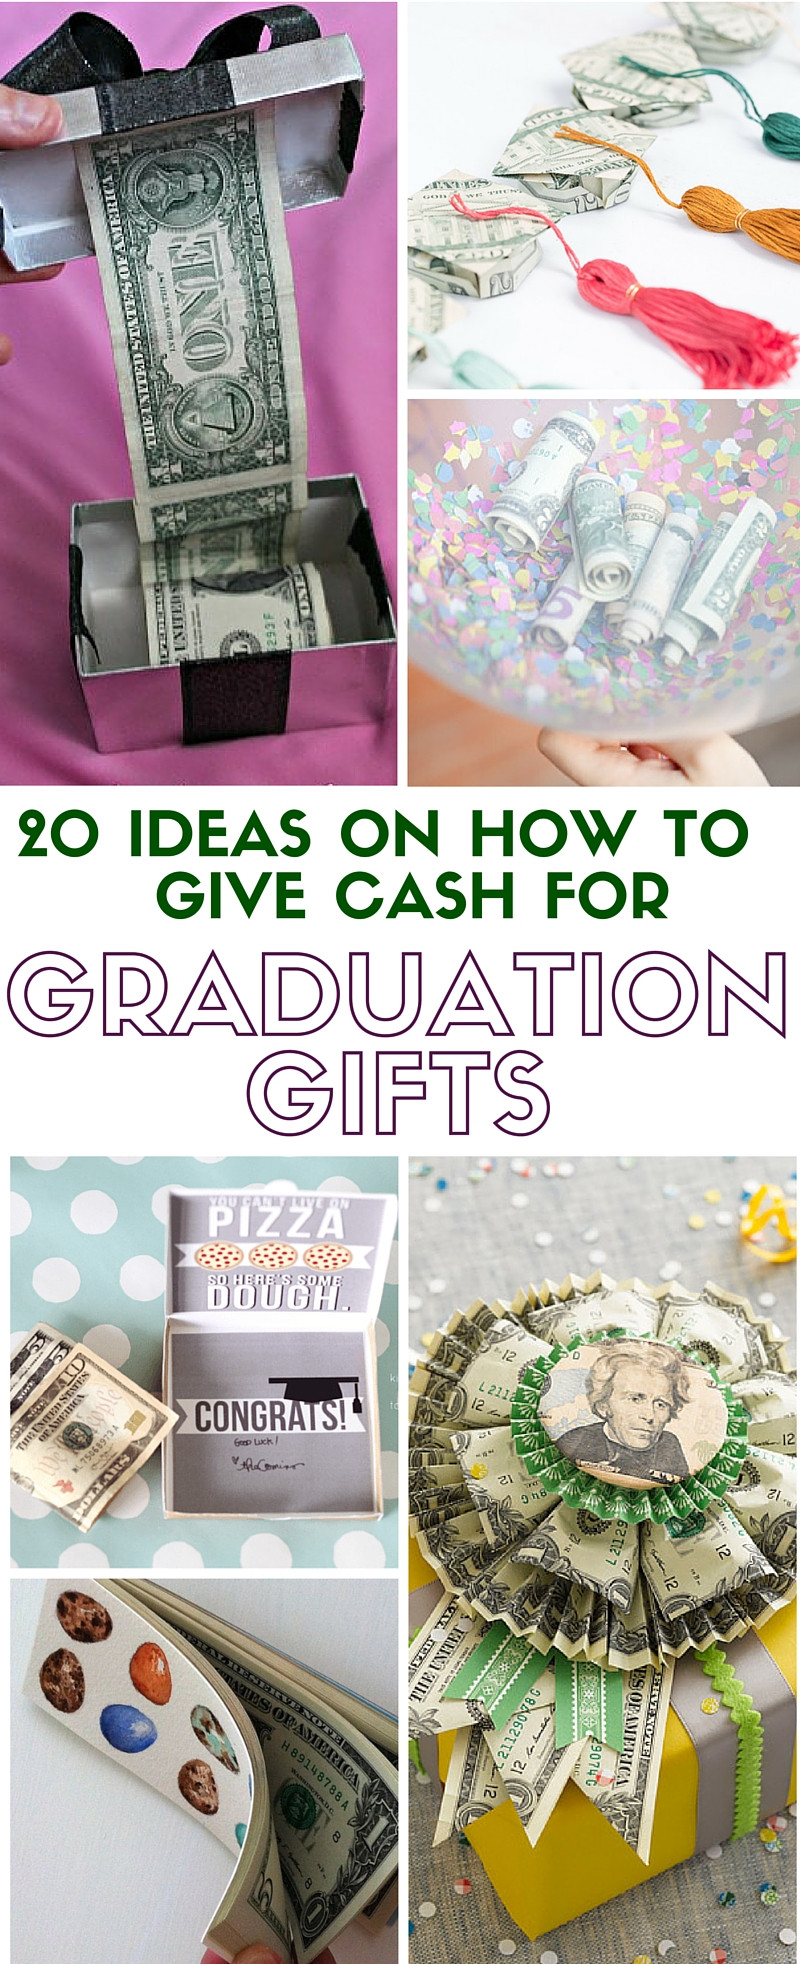 Good Graduation Gift Ideas
 31 Back To School Teacher Gift Ideas The Crafty Blog Stalker